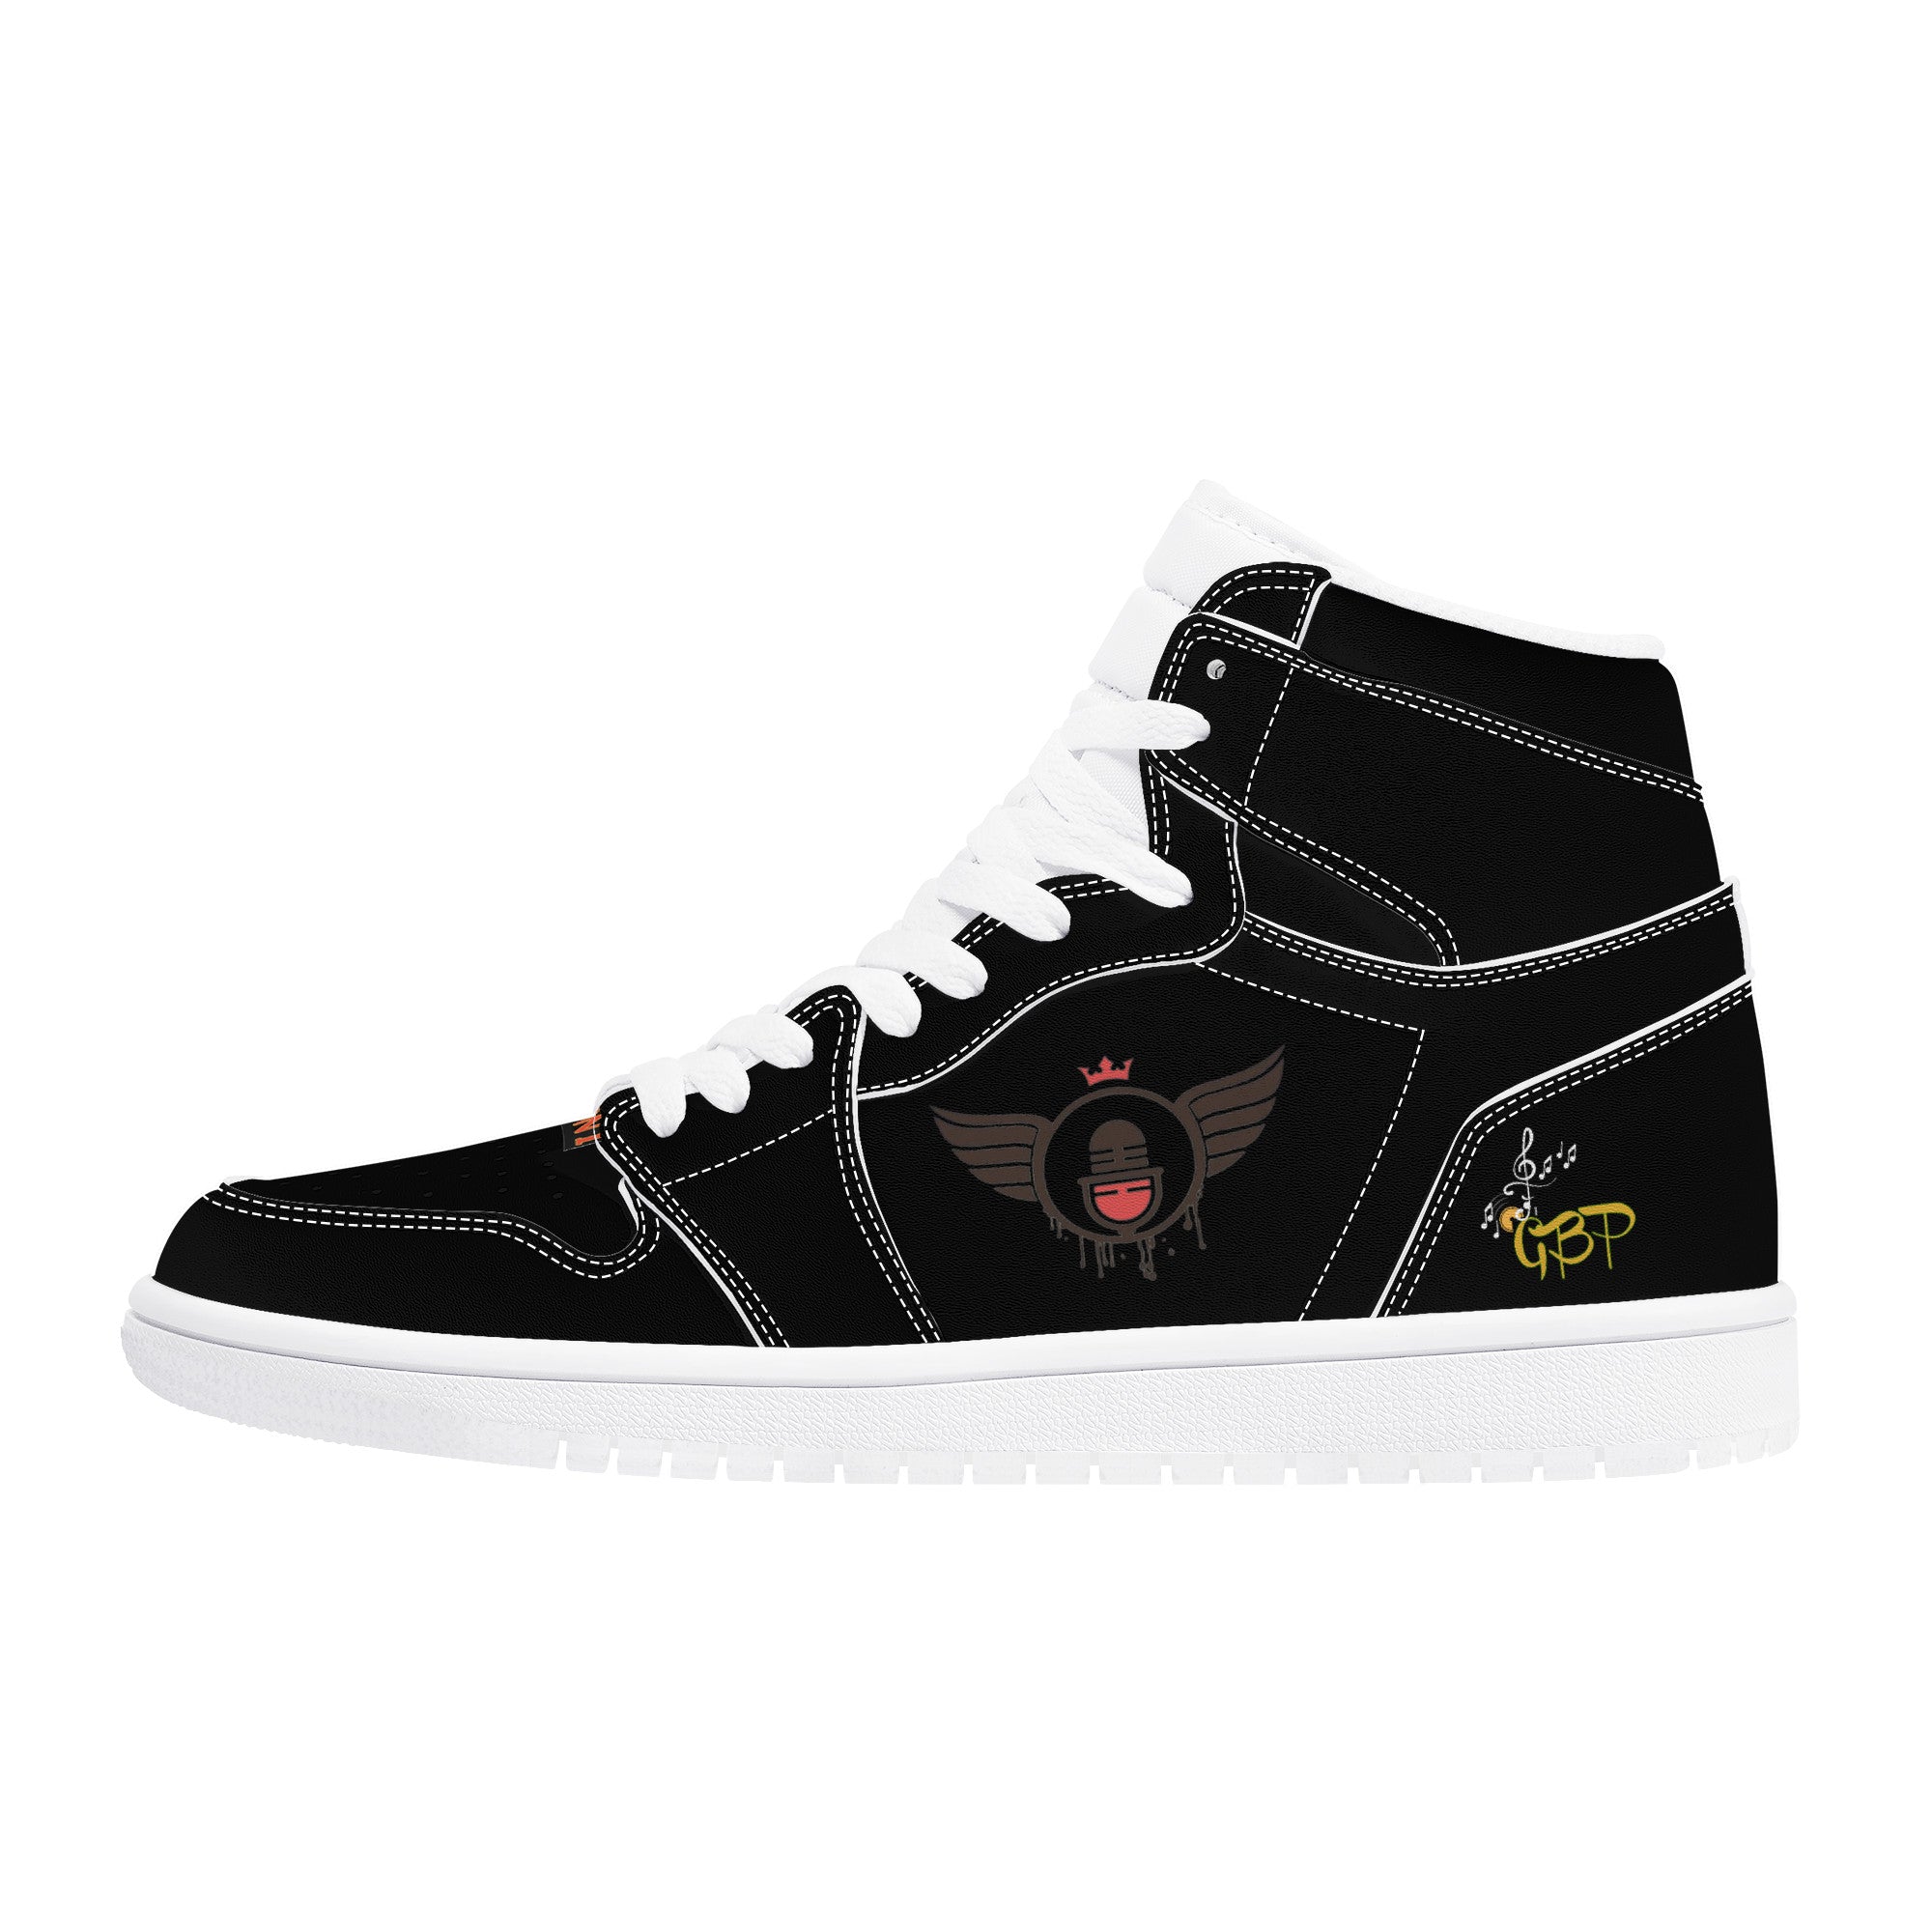 Basic Black | Vision 1 Collection | High Top Sneaker - Designed Shoe Drop - Shoe Zero